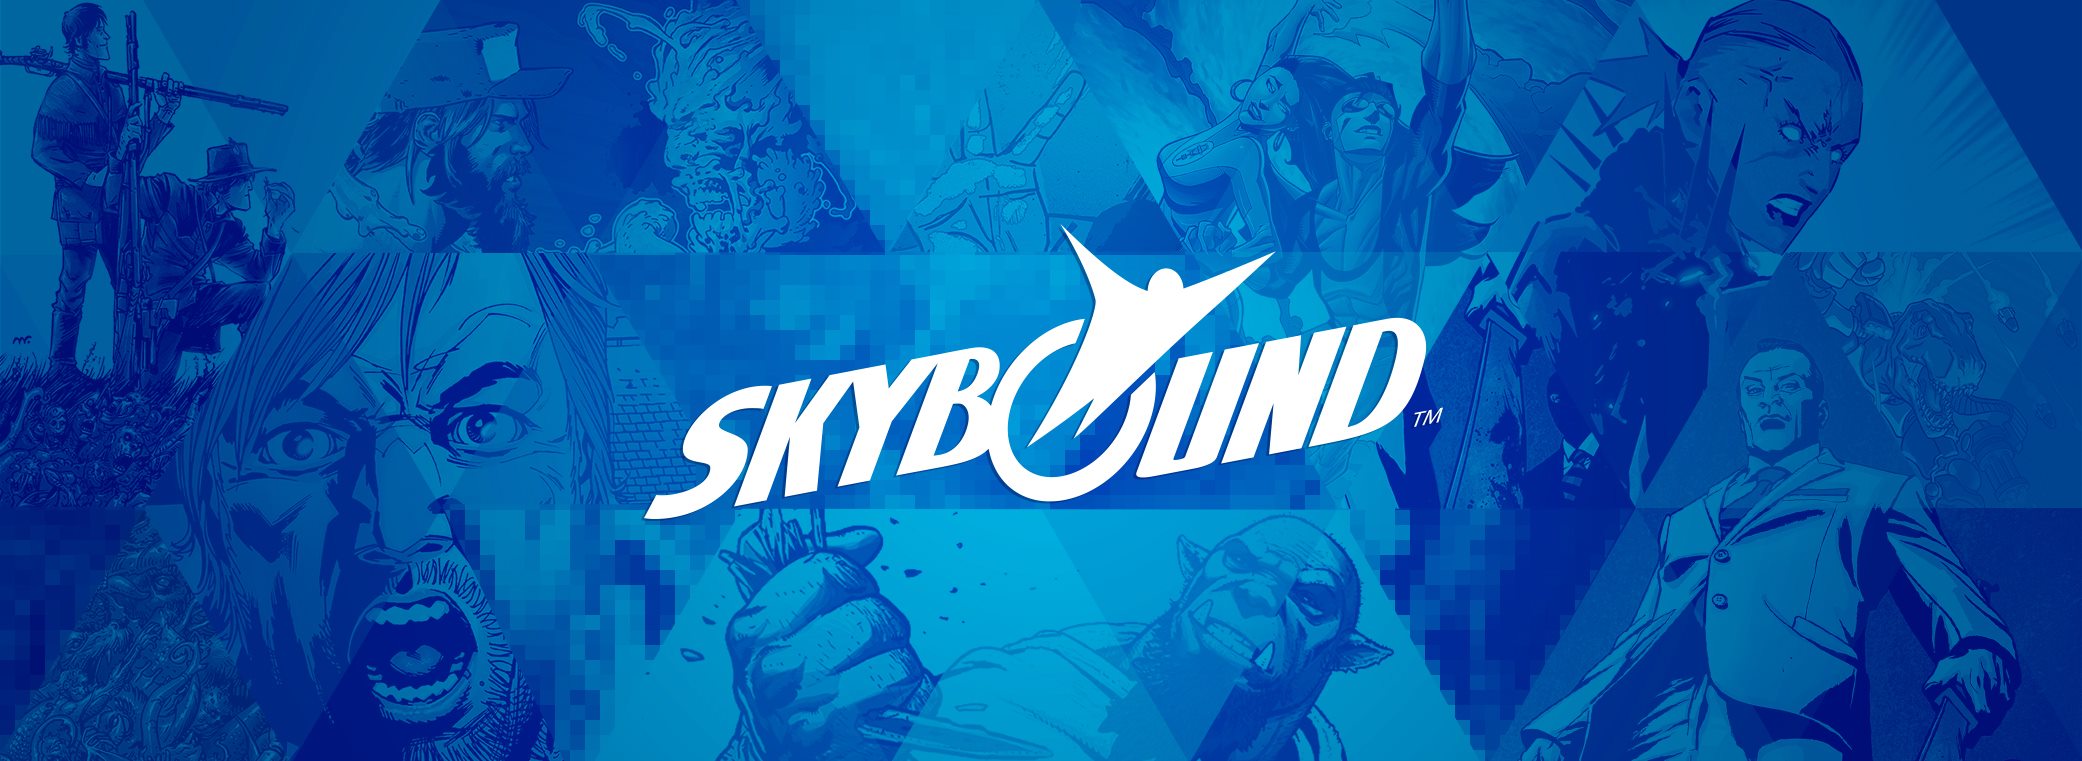 Choose a Skybound comic: